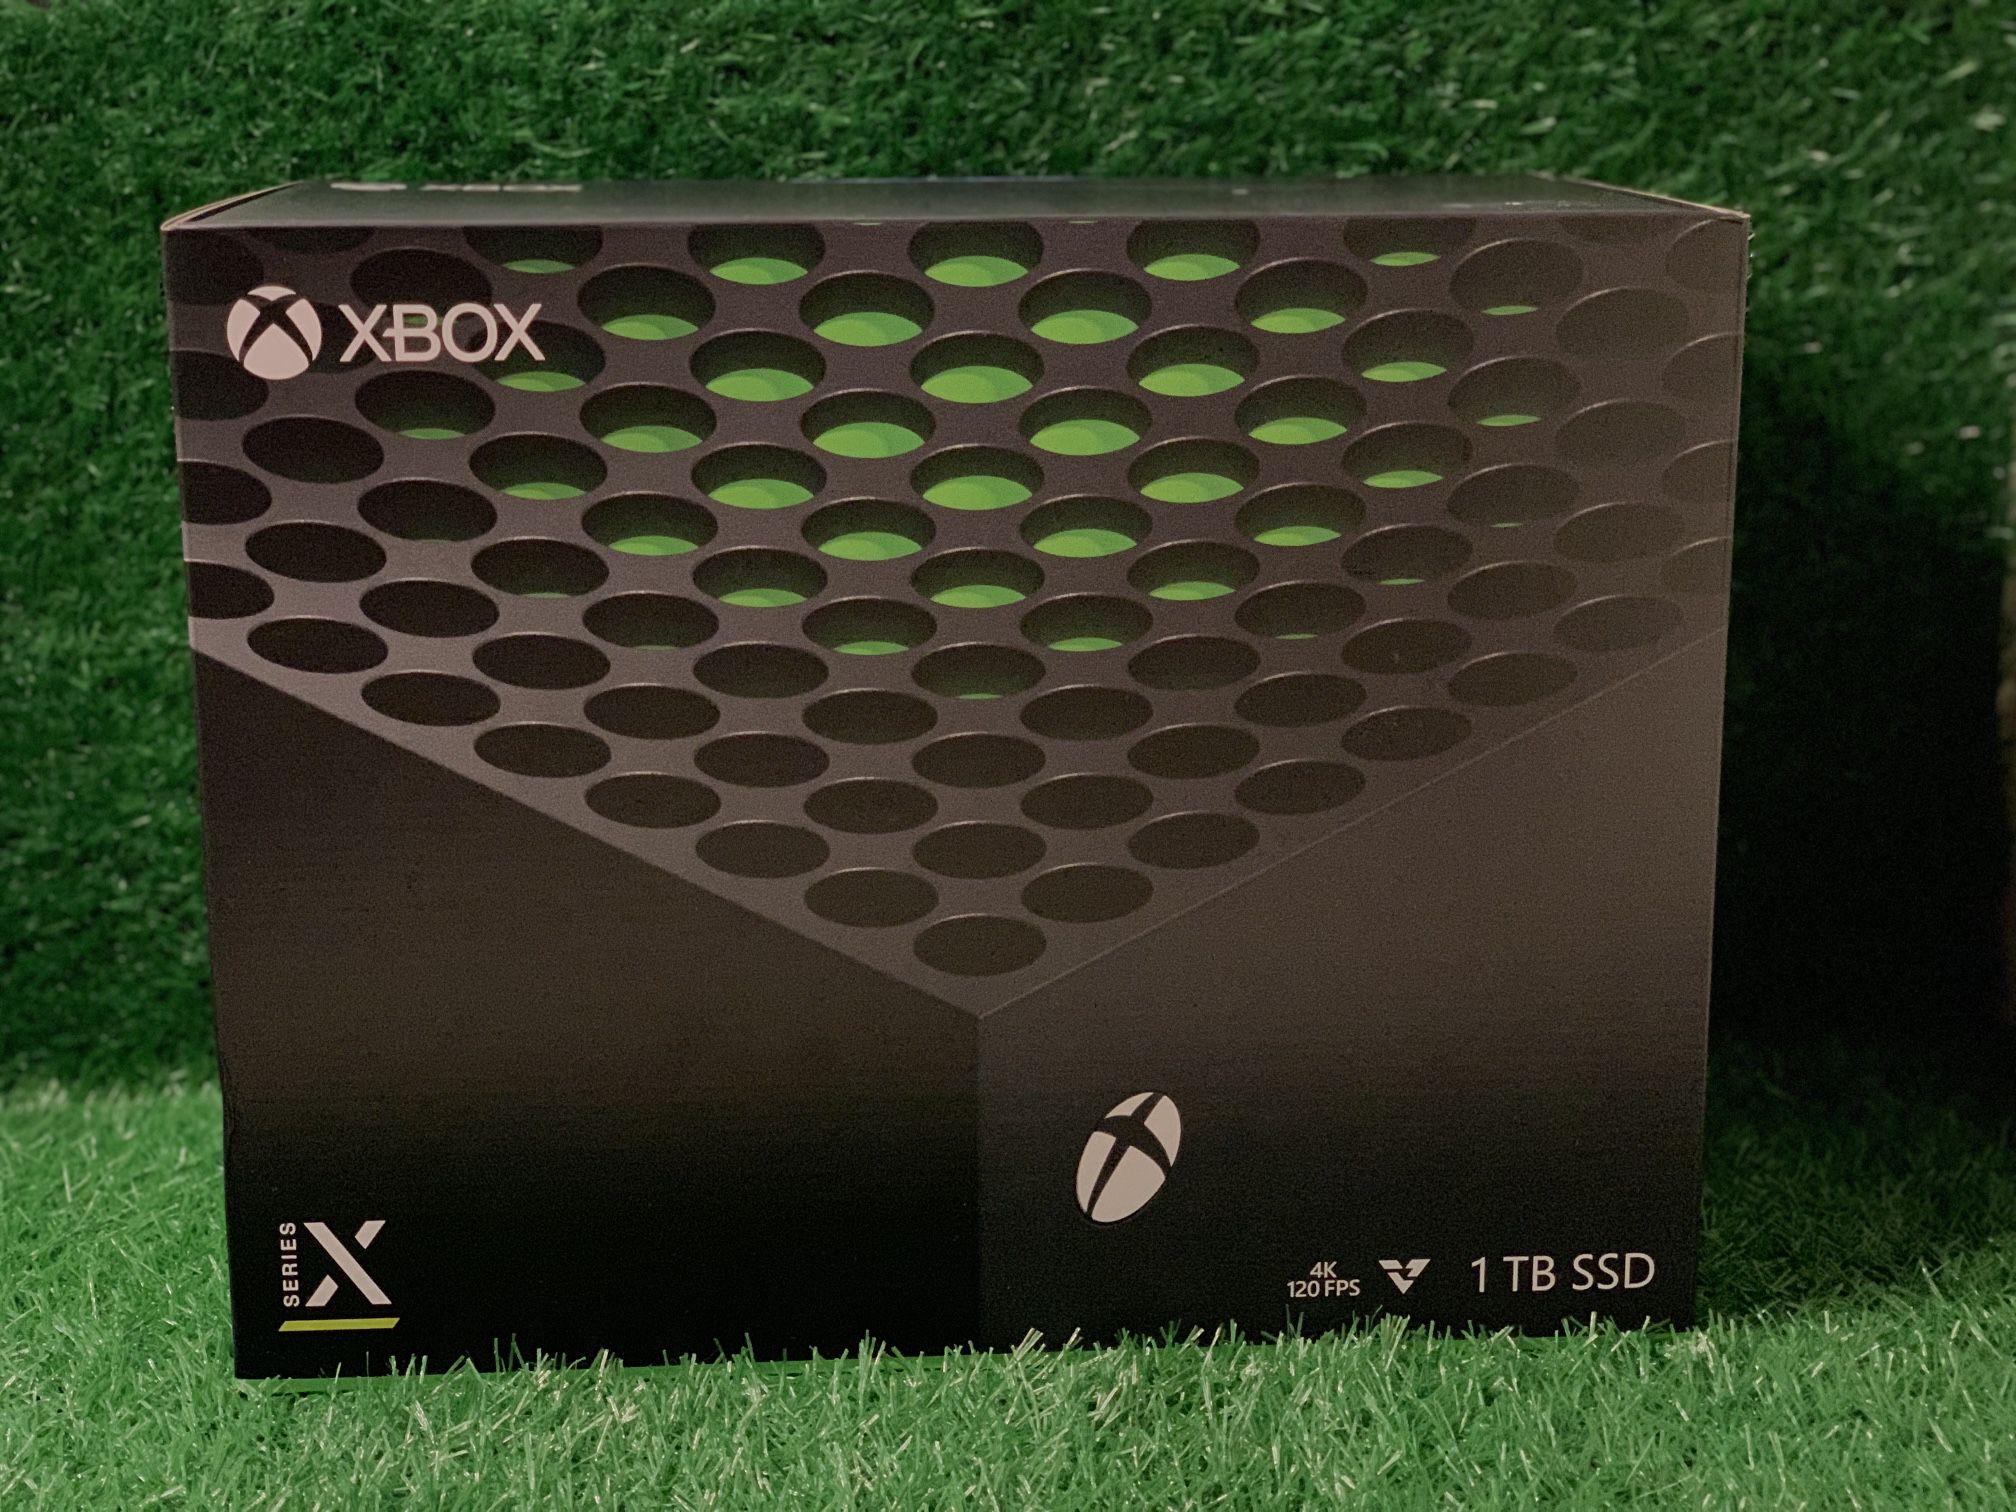 Xbox Series X Brand New 